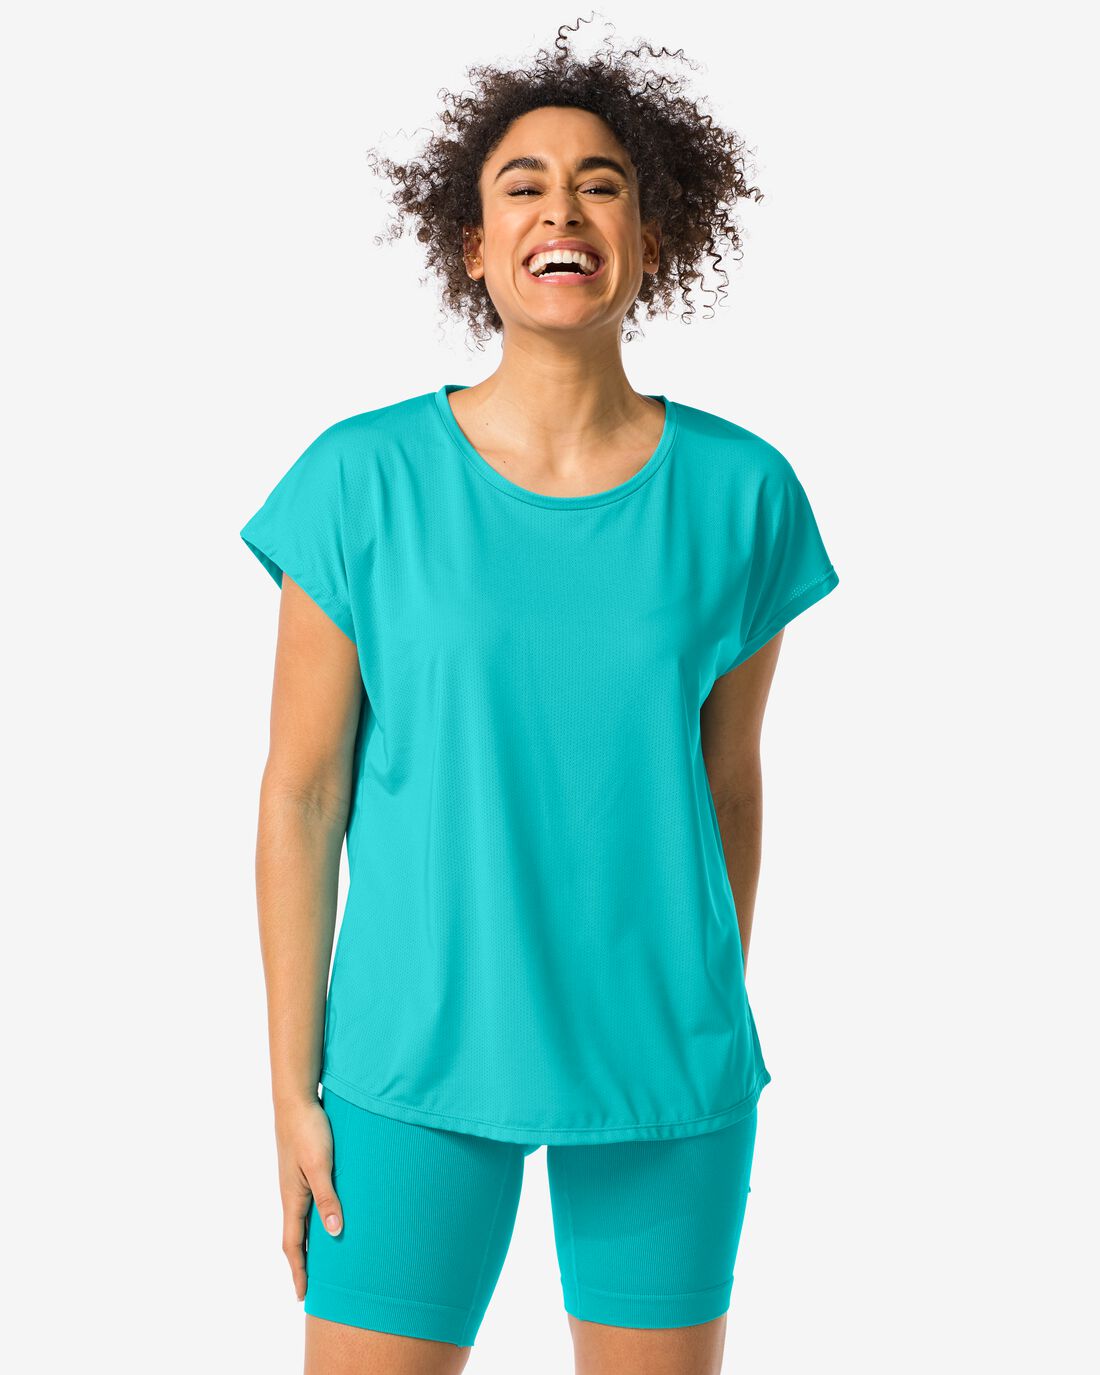 HEMA Dames Sportshirt Turquoise (turquoise)